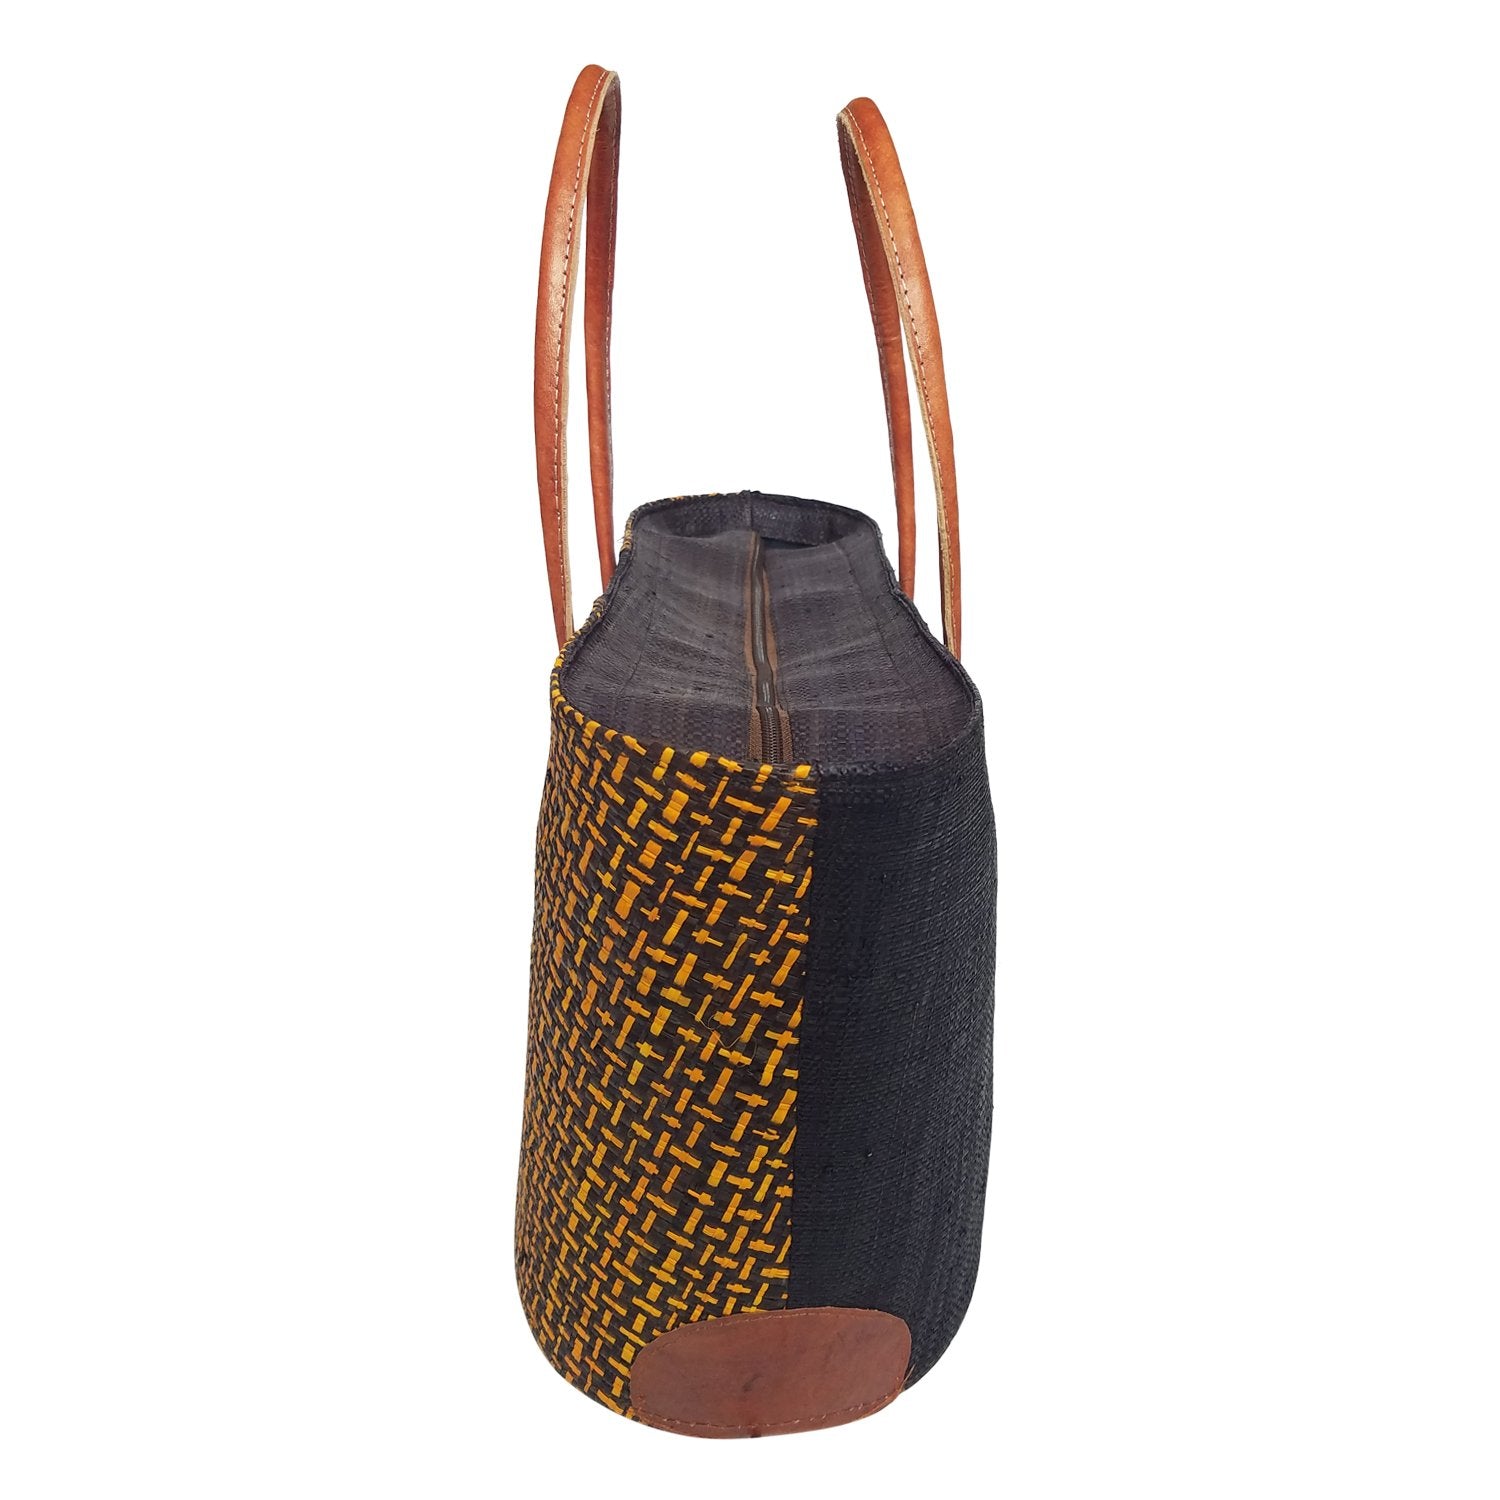 2 of 3: Raissa: Authentic Handmade Multicolor Madagascar Raffia Buttons Hand Bag